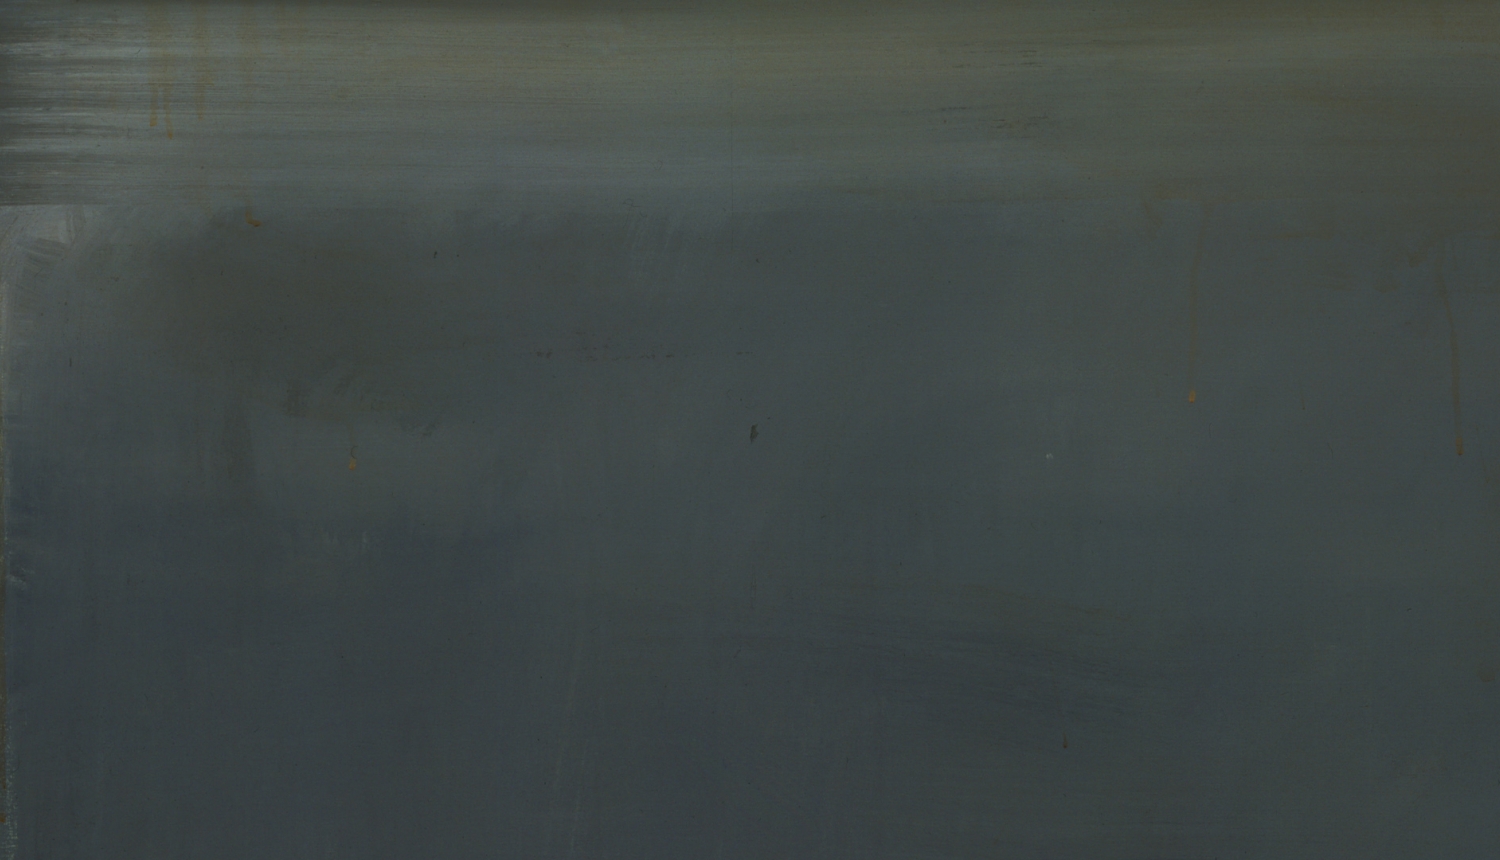 Marks Rotko. Bez nosaukuma. 1969. Audekls, akrils. 233.7 x 200.3 cm. Keitas Rotko Prizelas un Kristofera Rotko kolekcija (fragments)